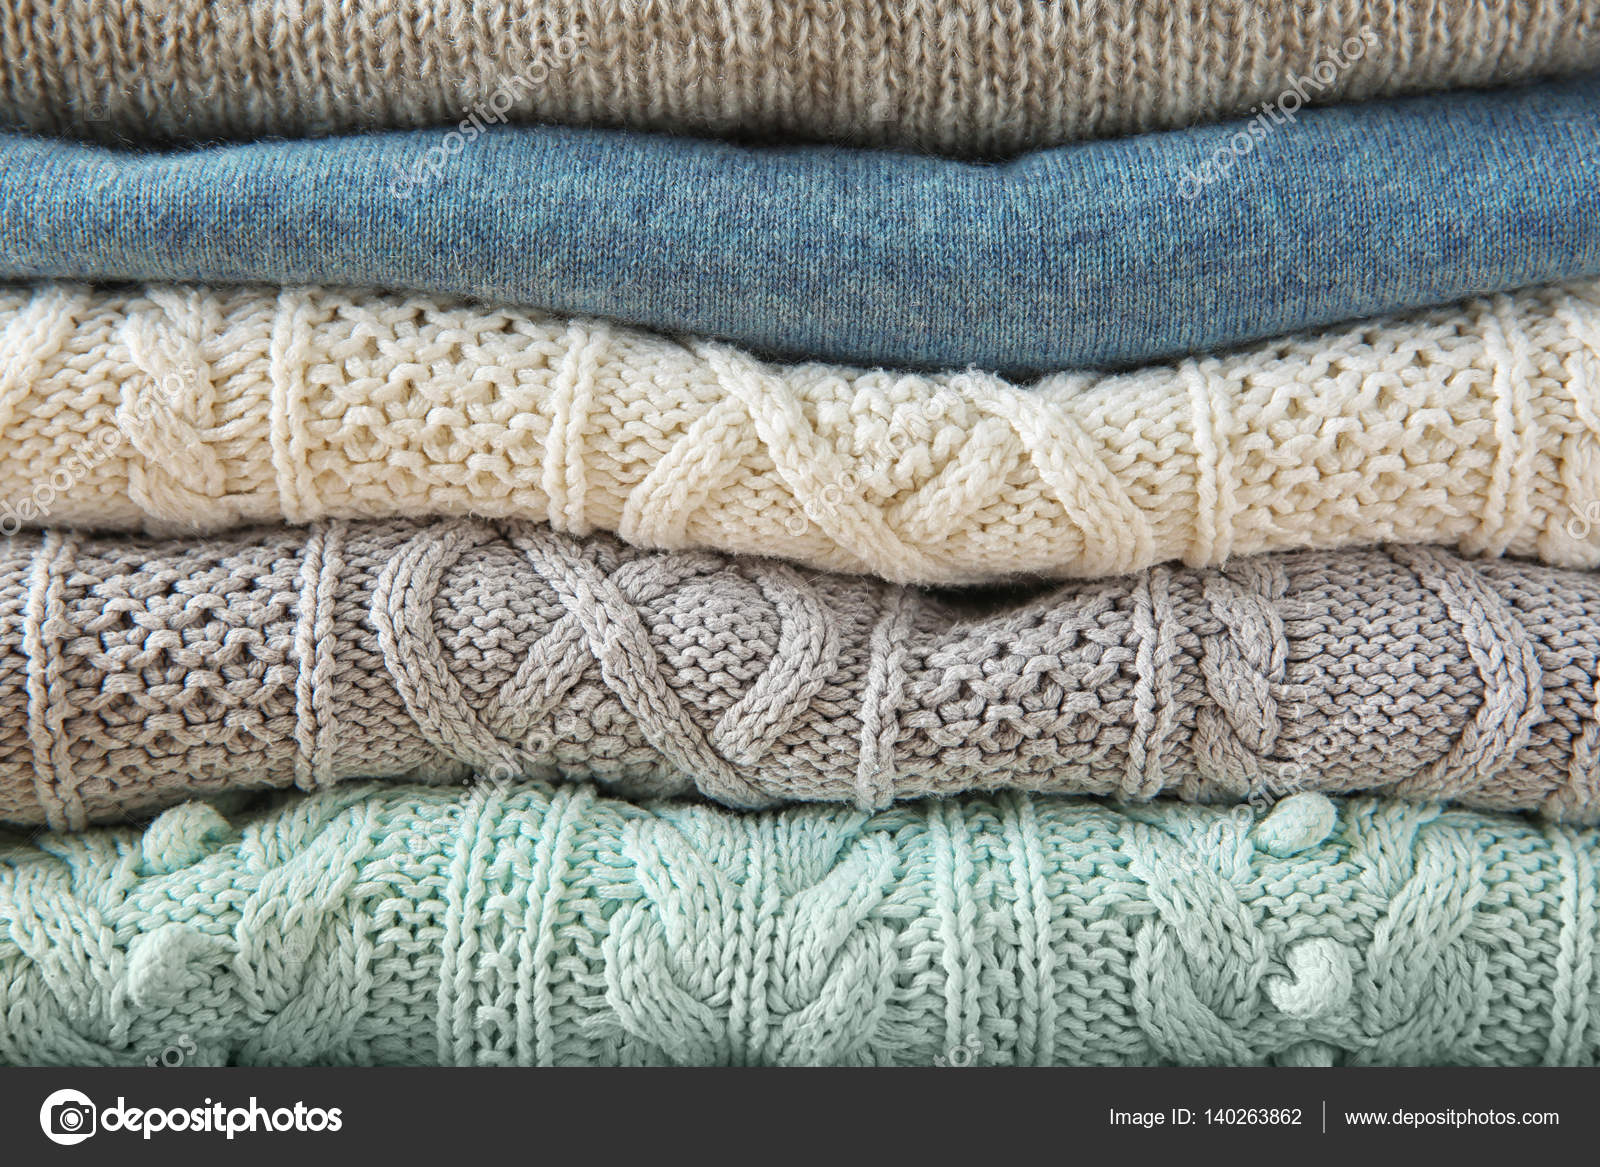 https://st3.depositphotos.com/1177973/14026/i/1600/depositphotos_140263862-stock-photo-stack-of-woolen-clothes.jpg